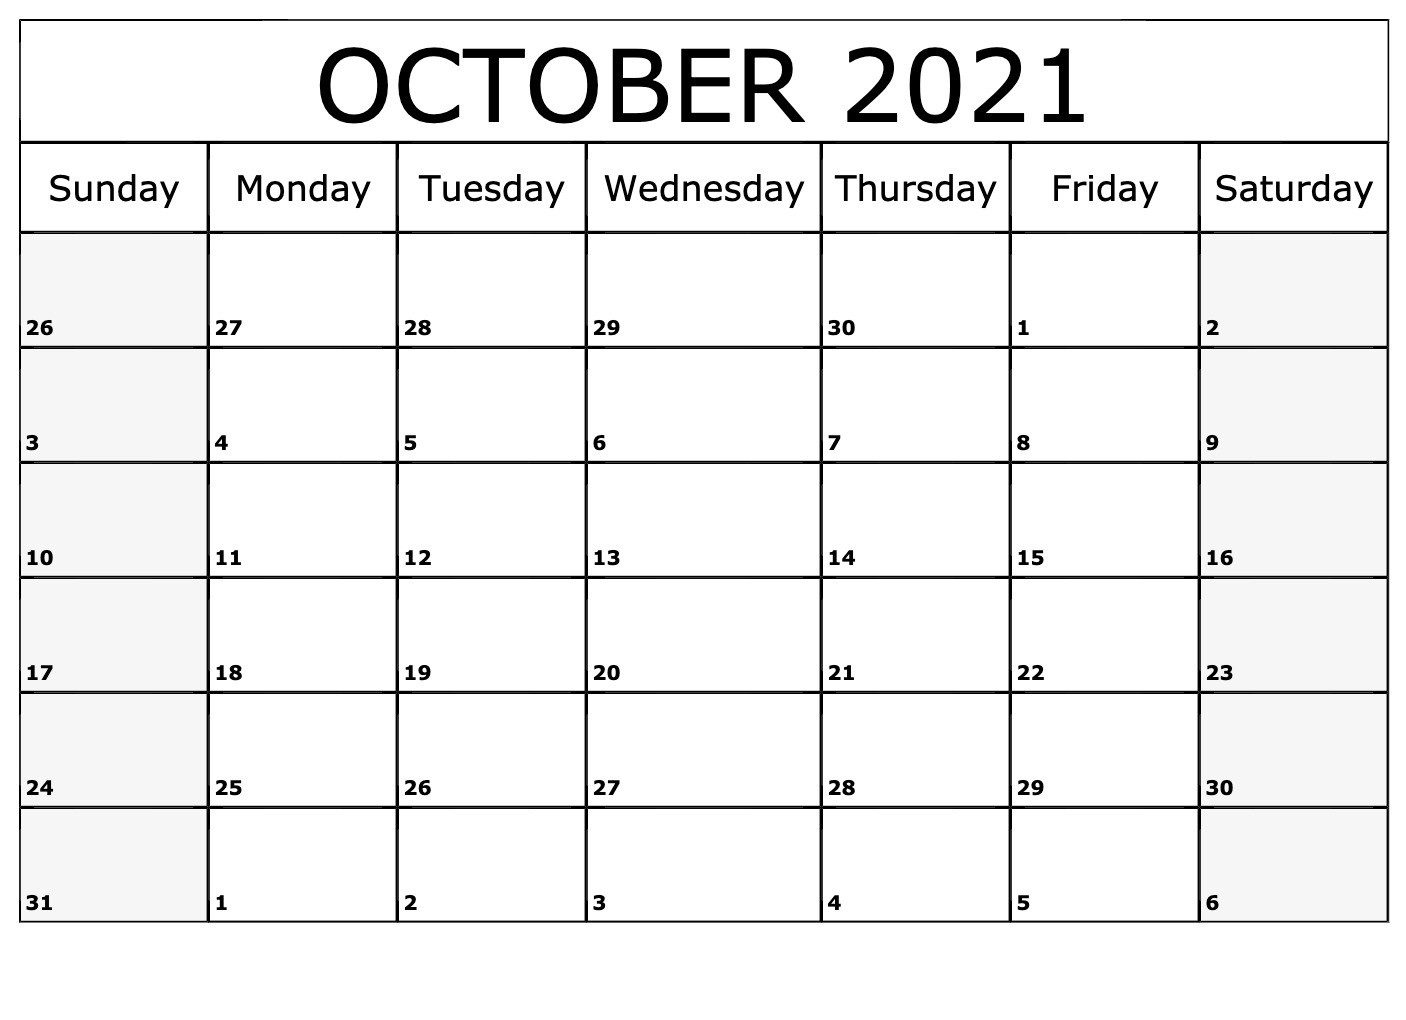 October 2021 Calendar Template October 2021 Calendar Horizontally Free Layouts for